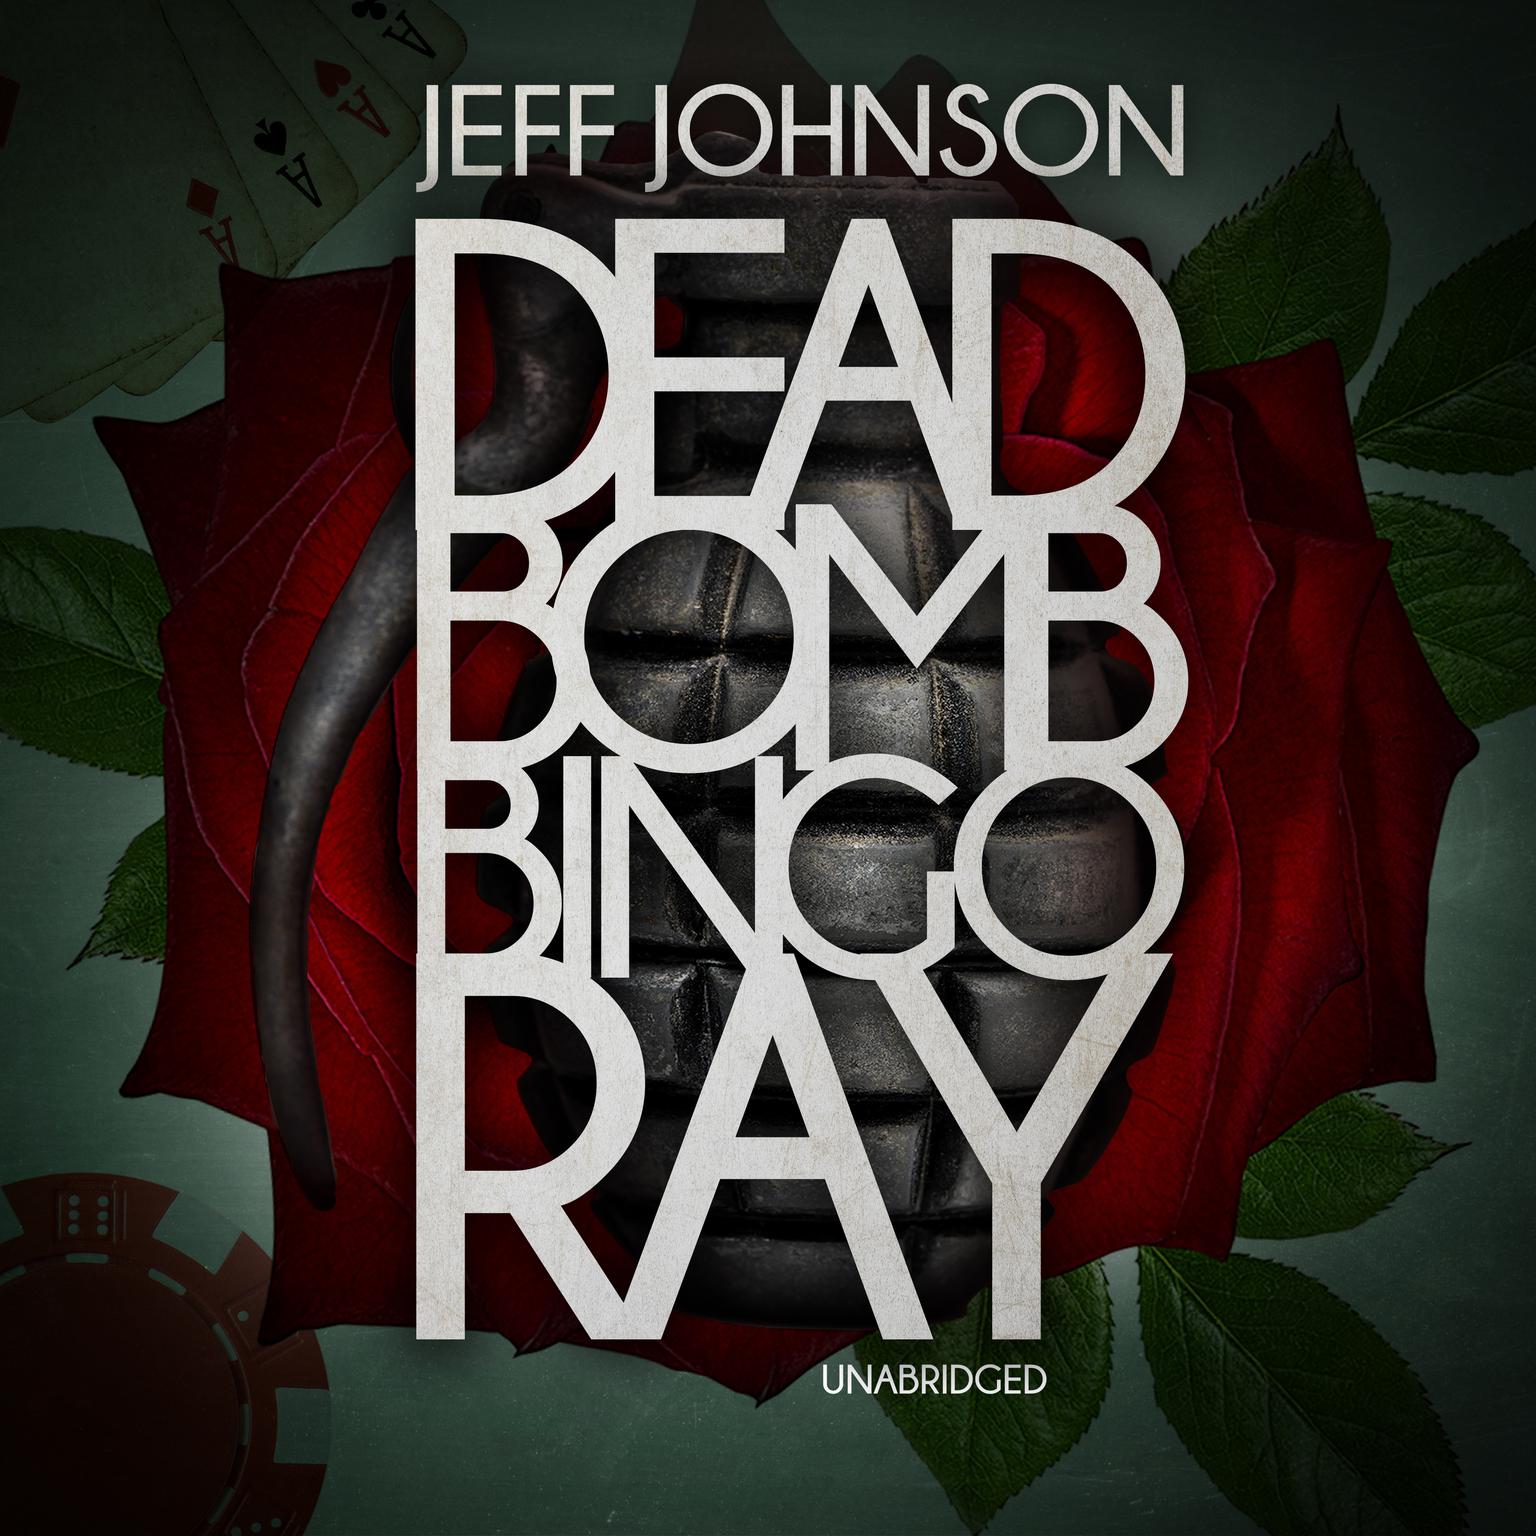 Deadbomb Bingo Ray Audiobook, by Jeff Johnson